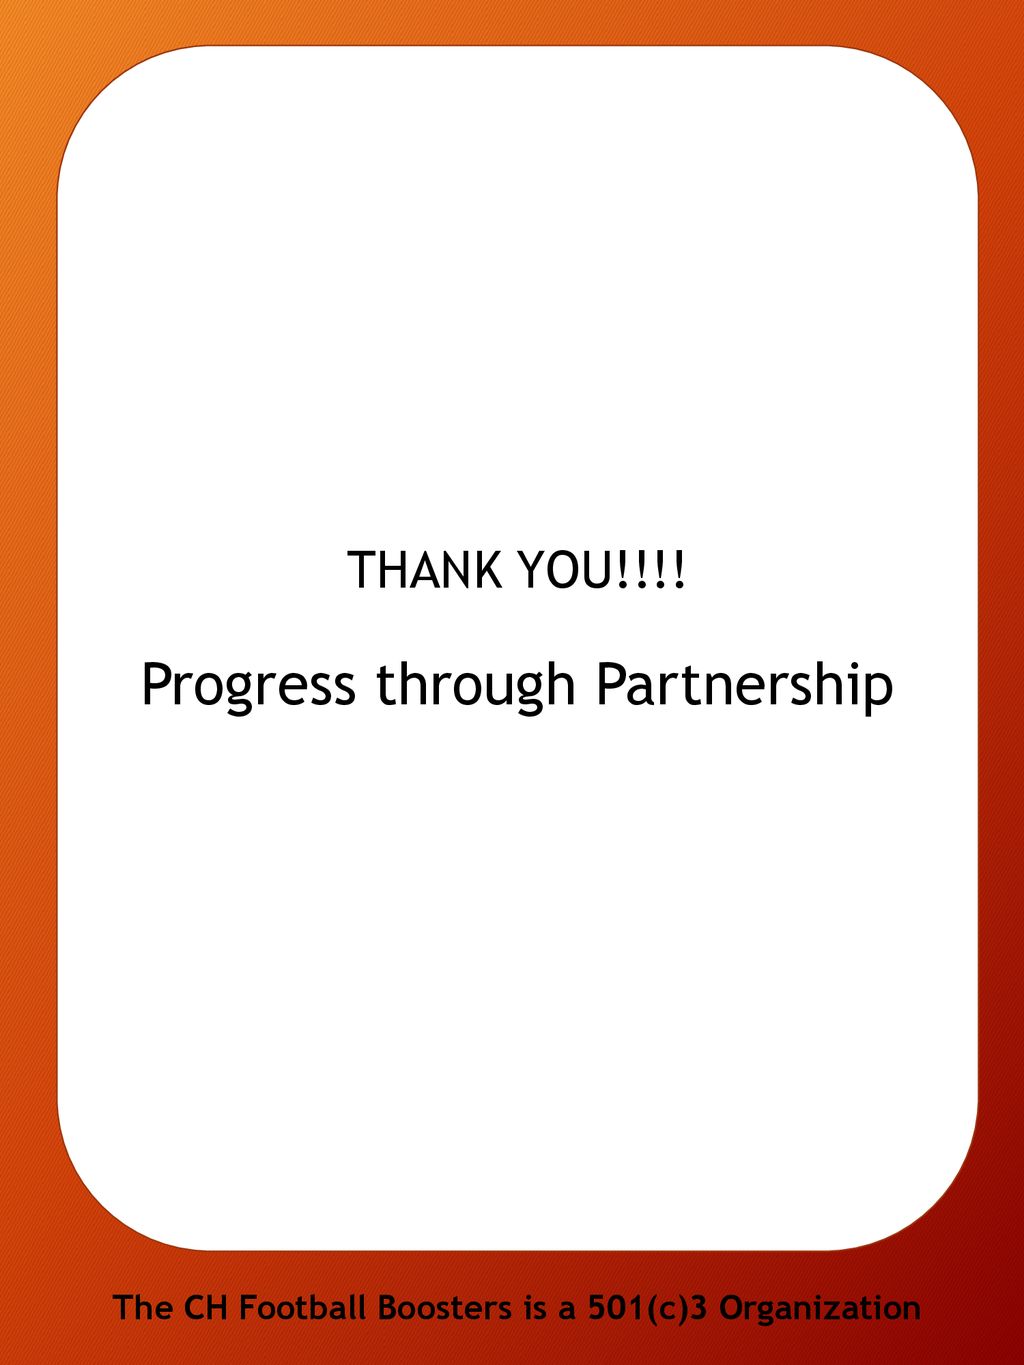 THANK YOU!!!! Progress through Partnership